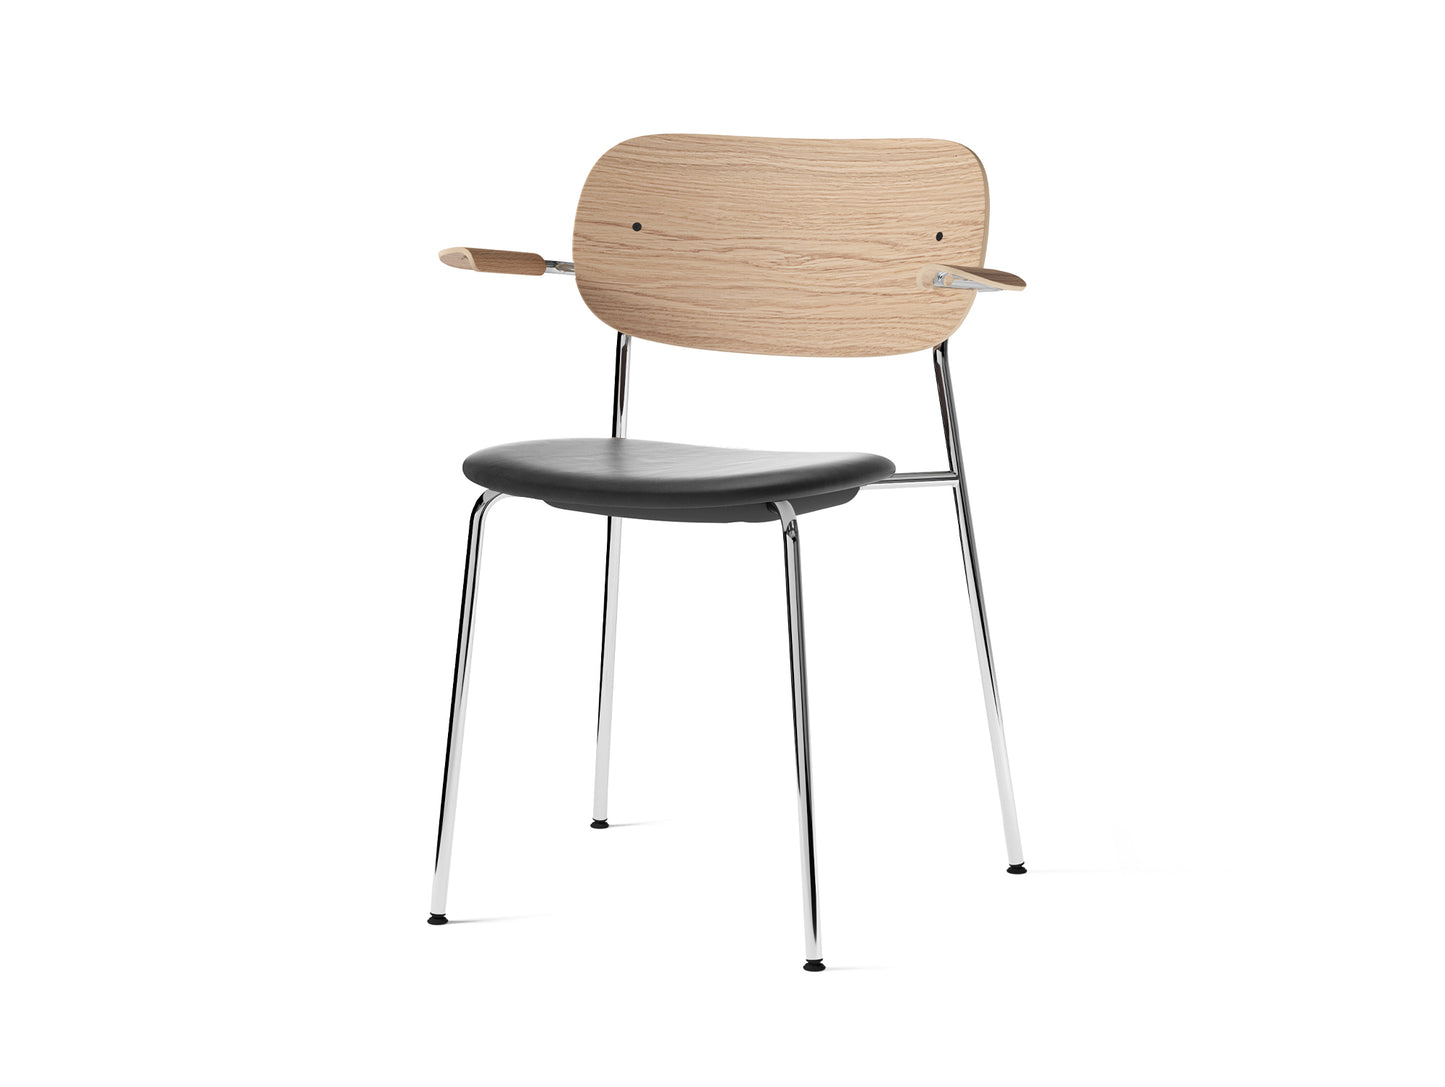 Co Dining Chair Upholstered by Menu - With Armrest / Chromed Steel / Natural Oak / Black Dakar Leather